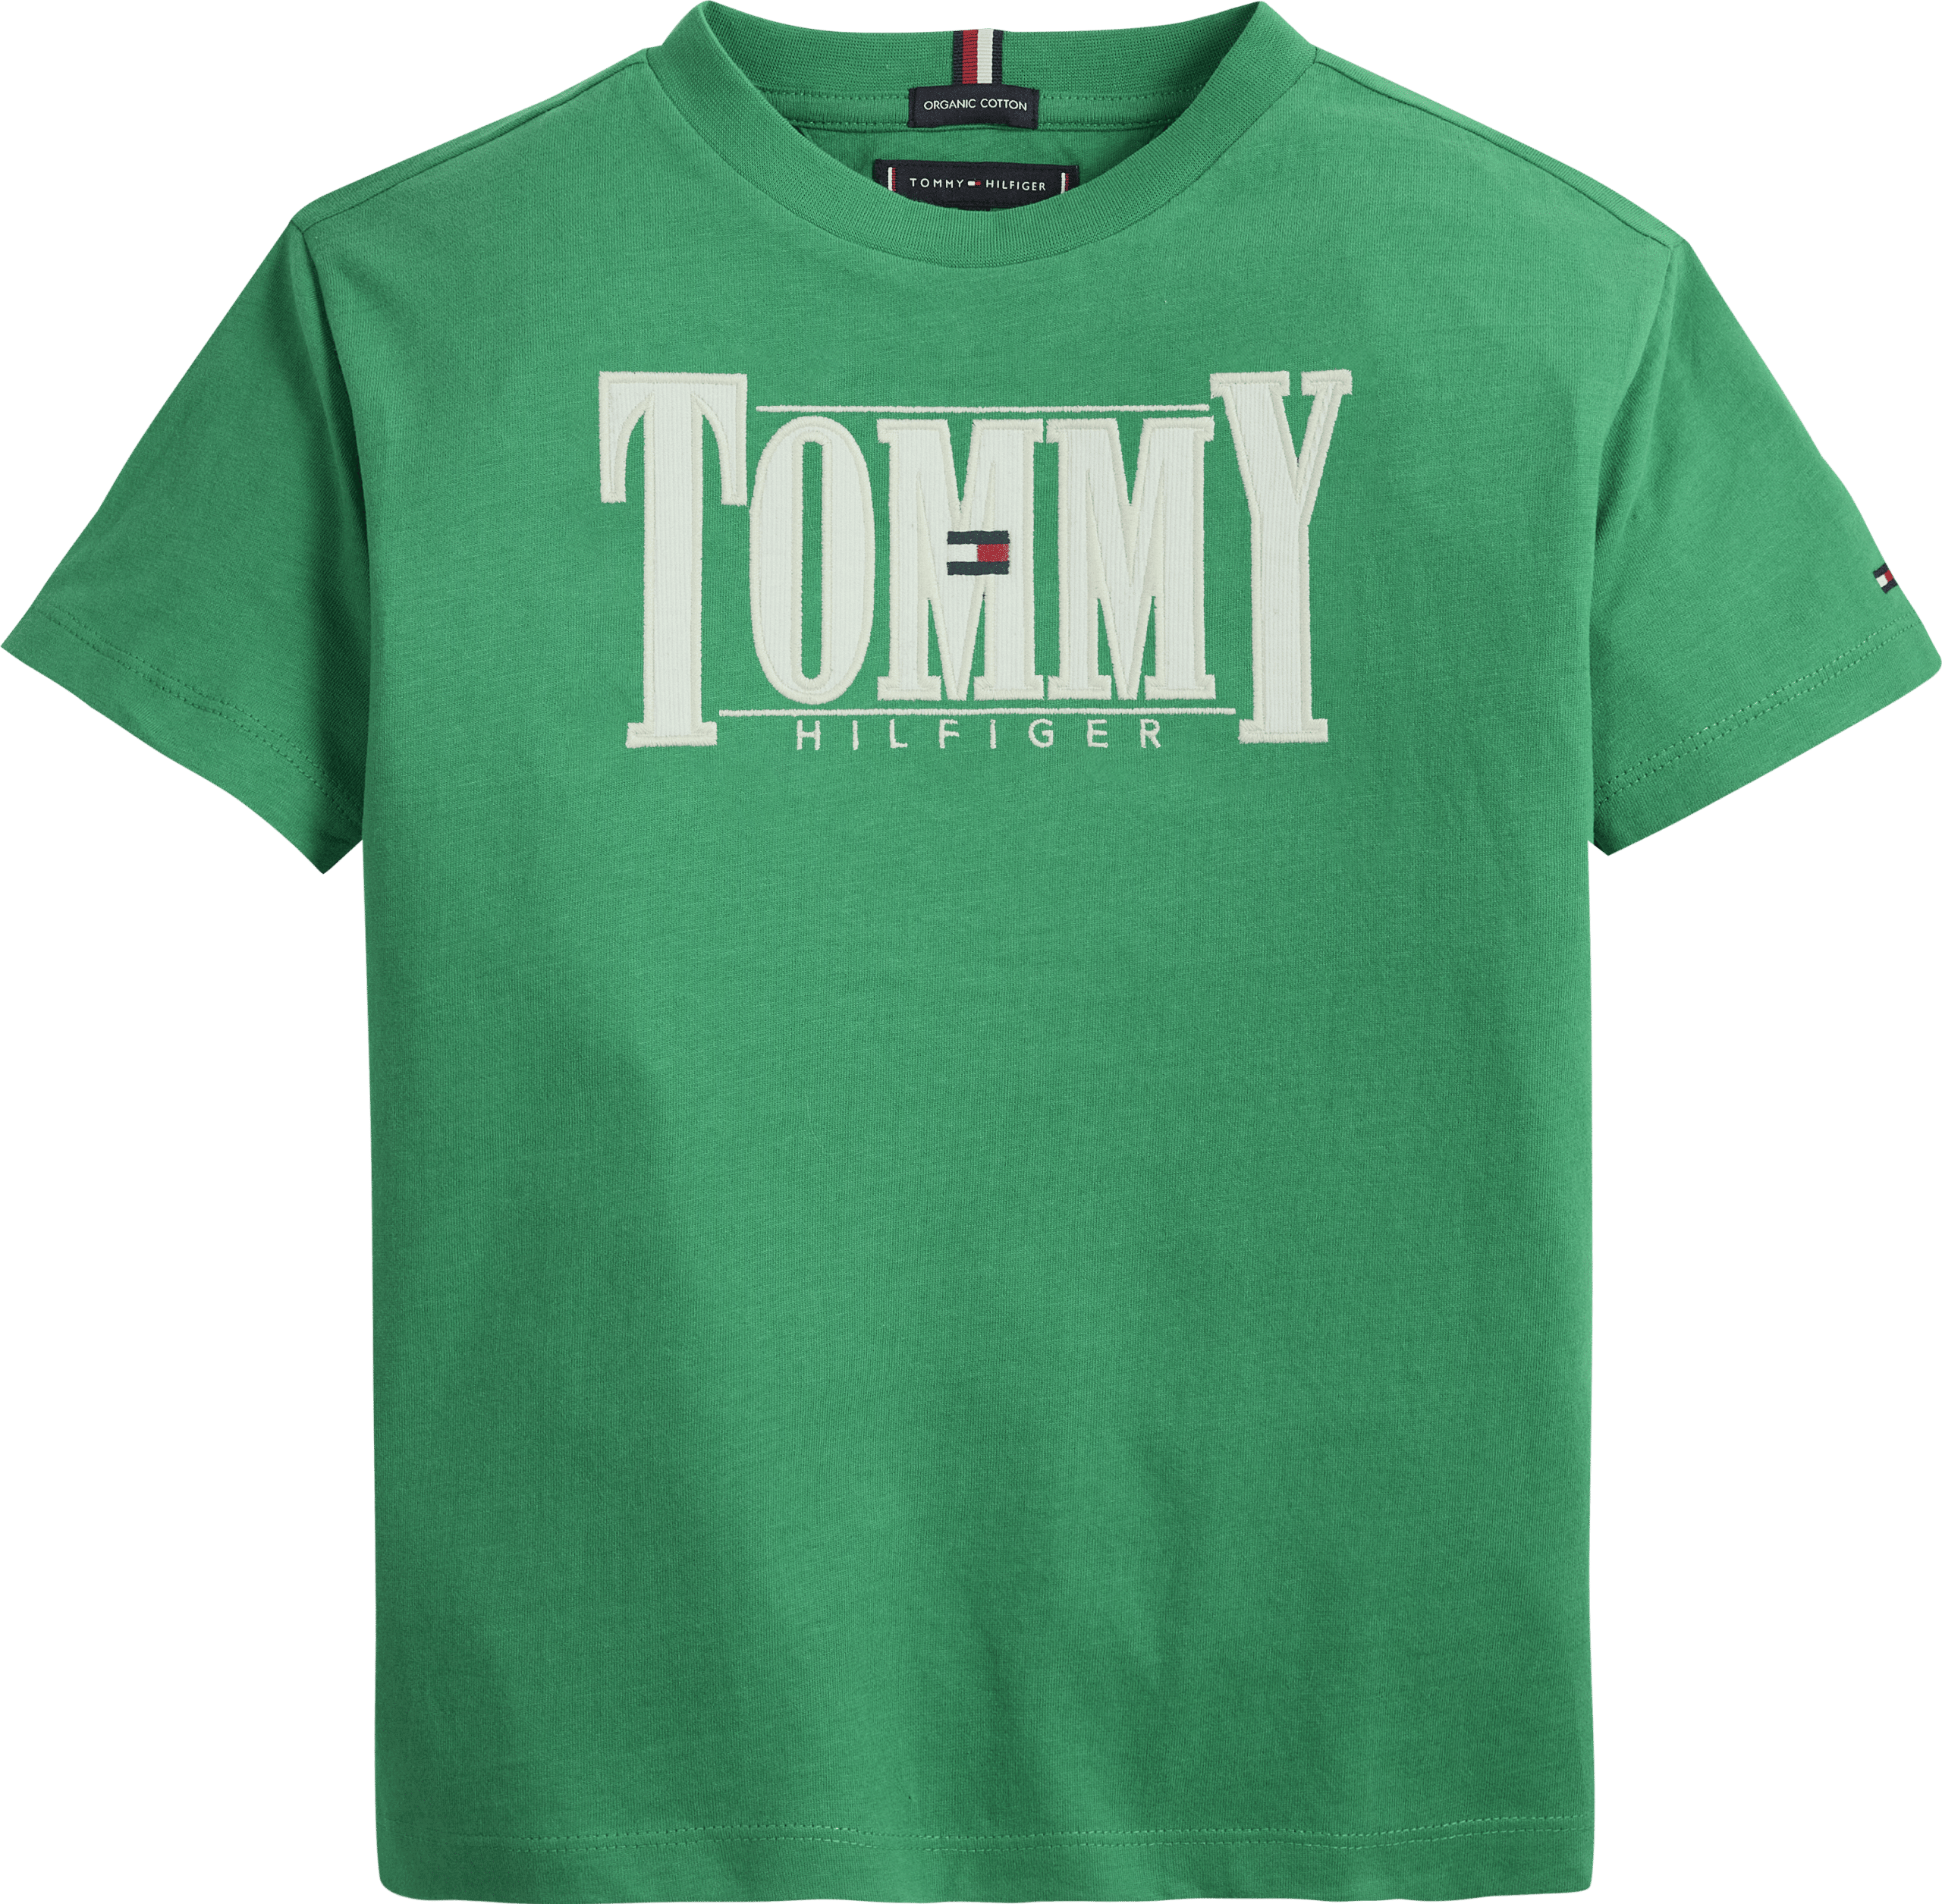 TOMMY HILFIGER KIDS - CORD APPLIQUE TEE S/S - KB0KB07790